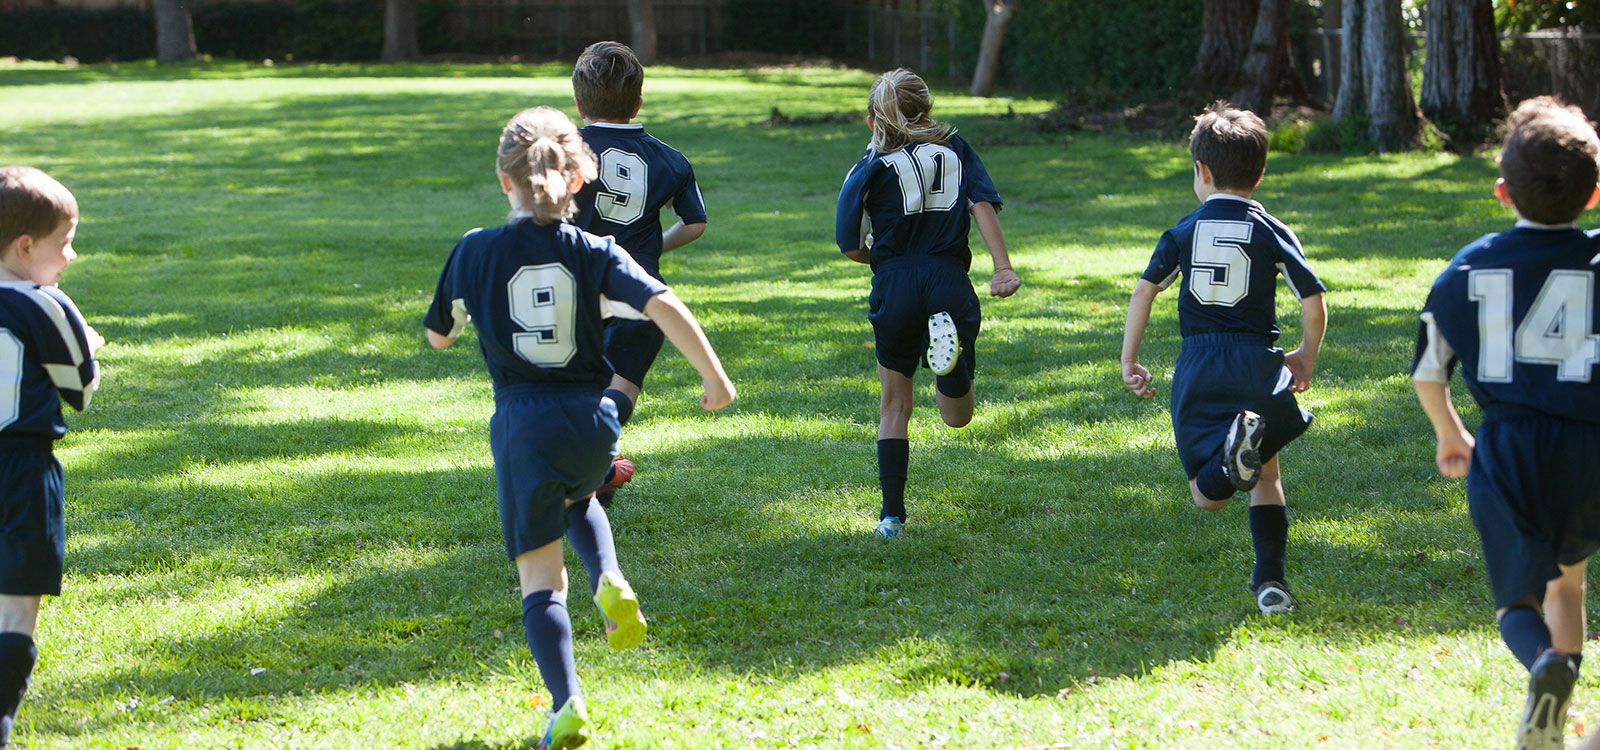 Kids playing soccer running